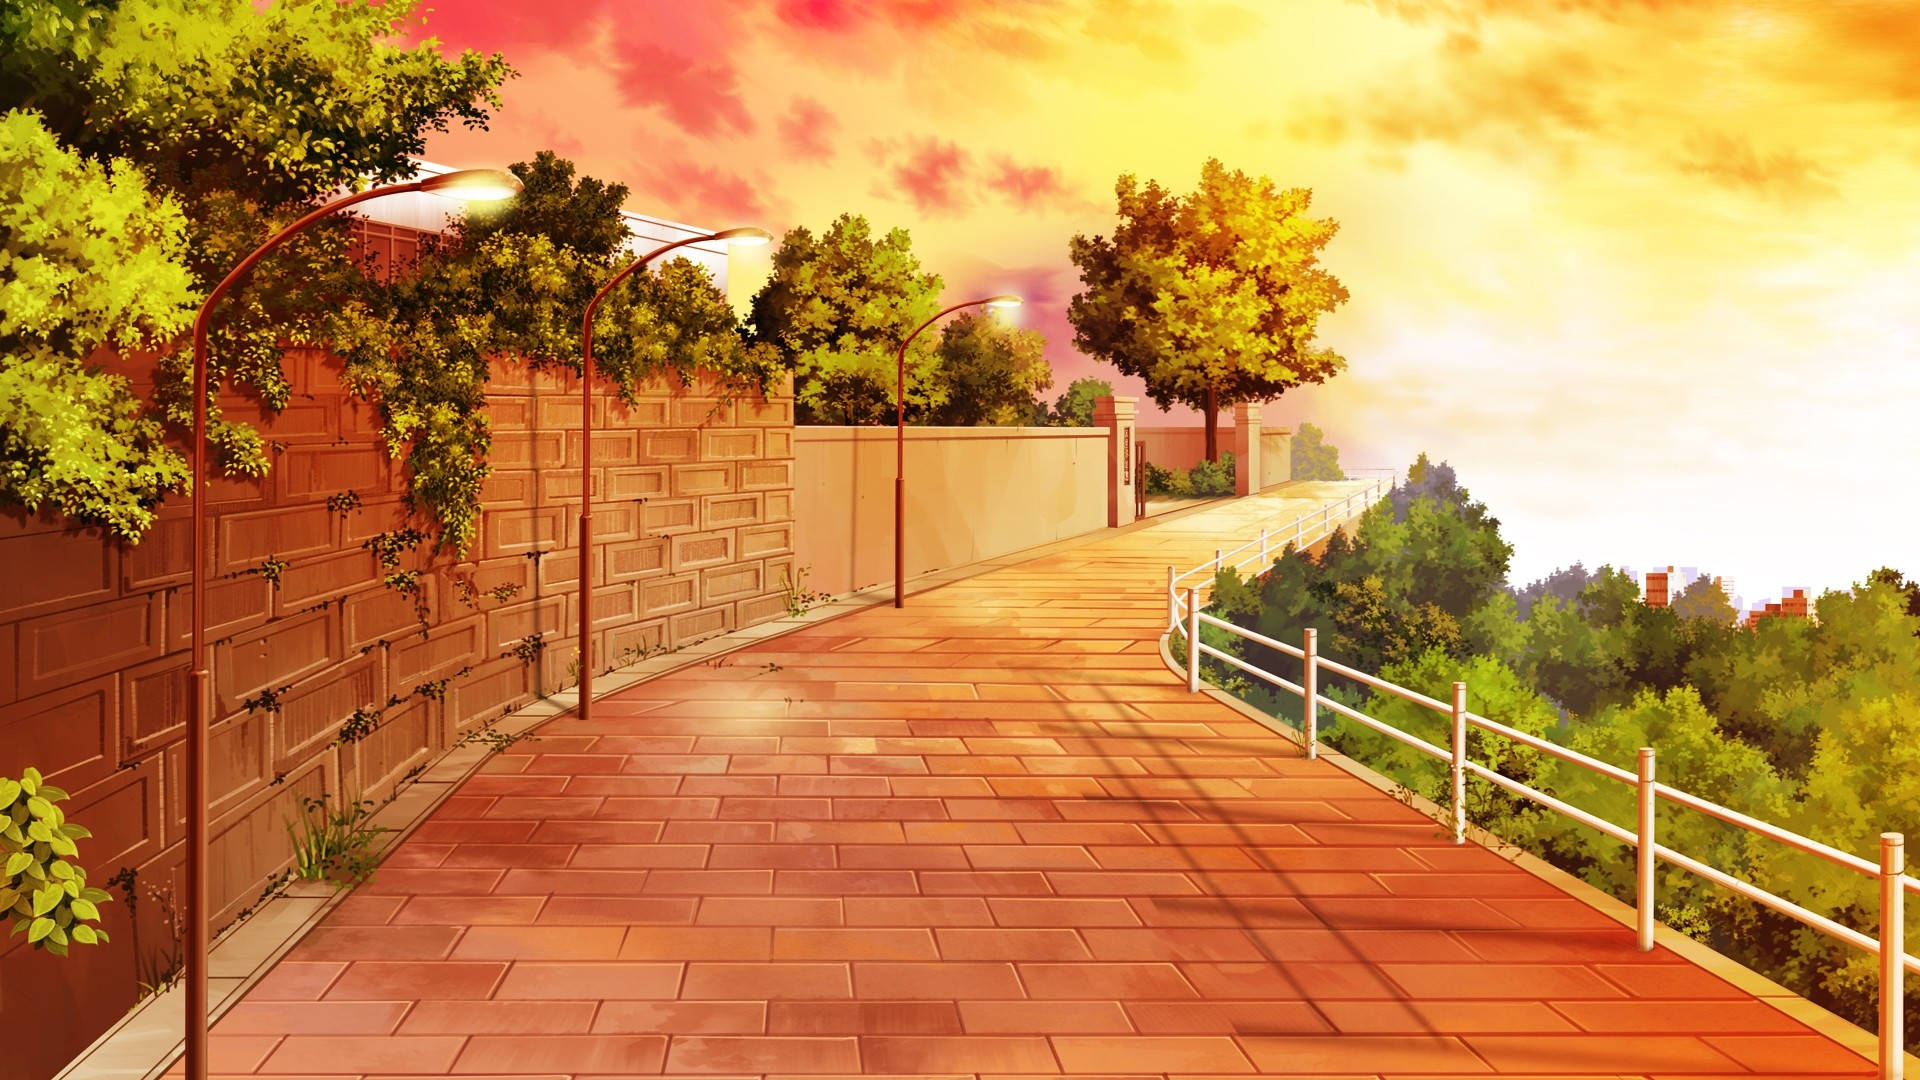 Anime Landscape by Elffyie on DeviantArt